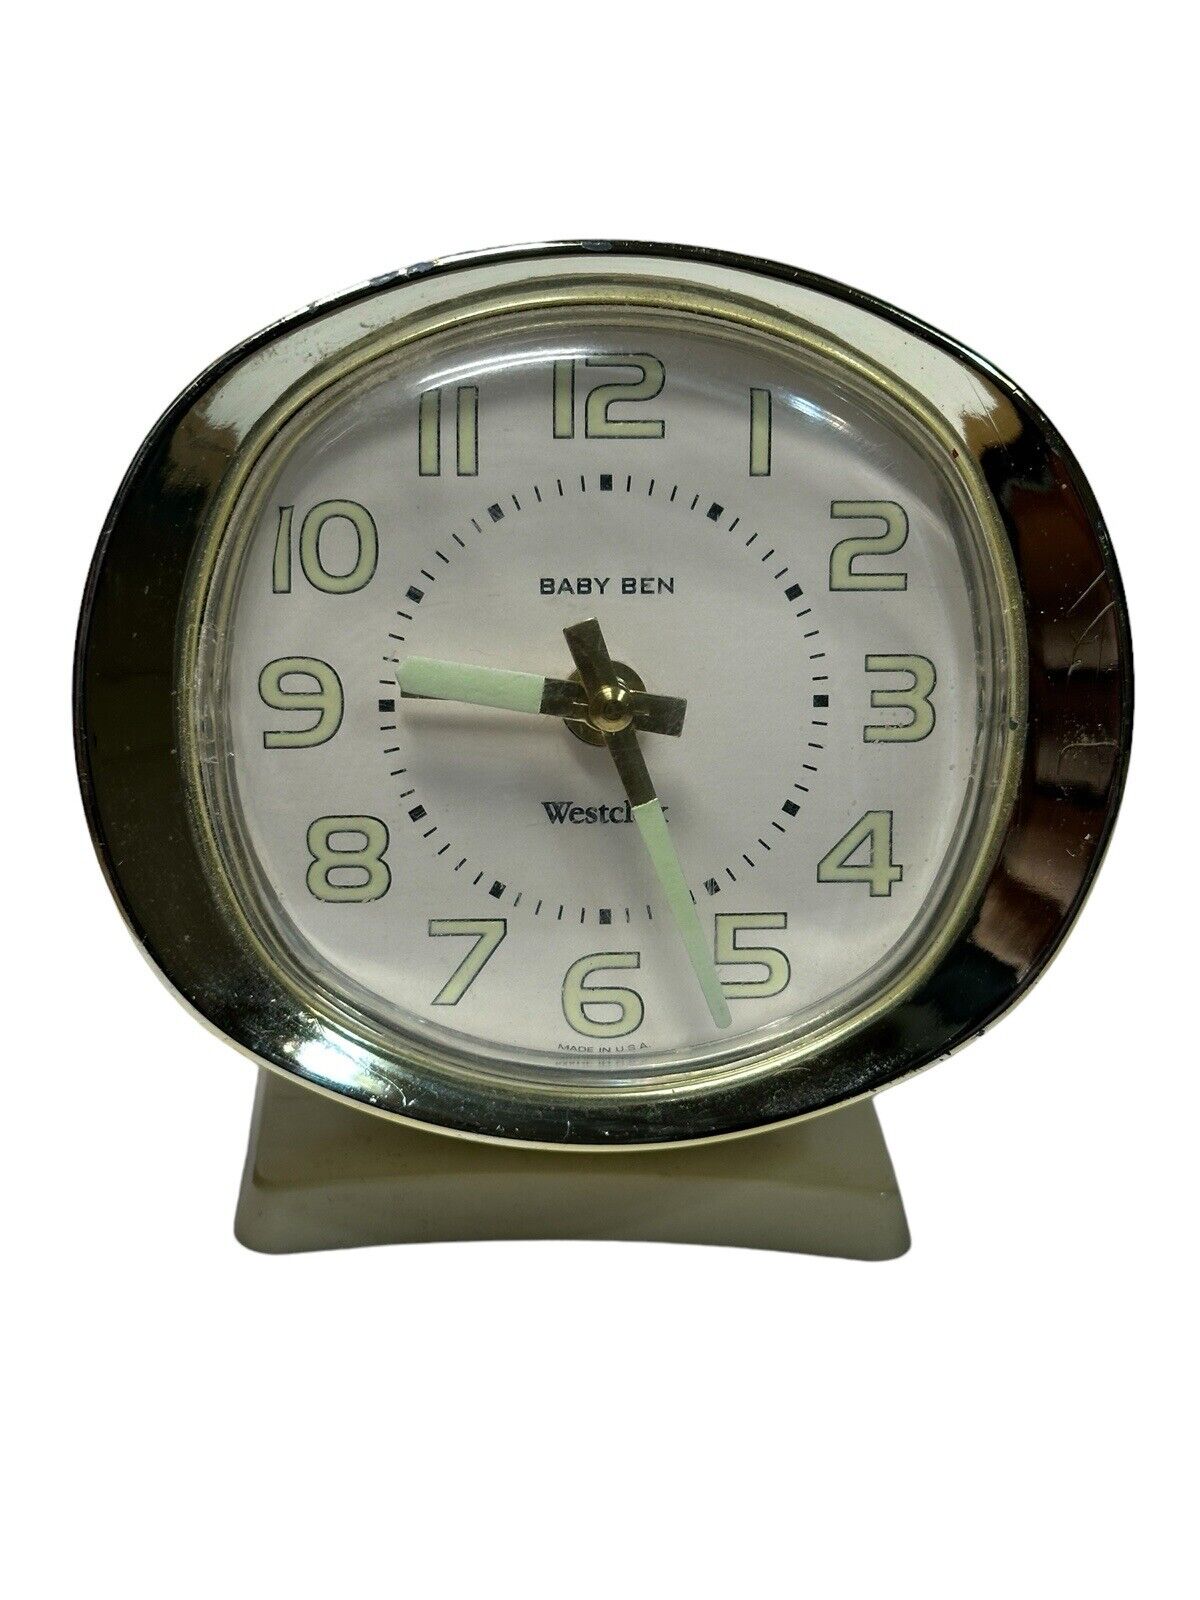 Vintage Westclox Alarm Clock, Big Ben. Wind-up model. Clean, Works. Made In USA